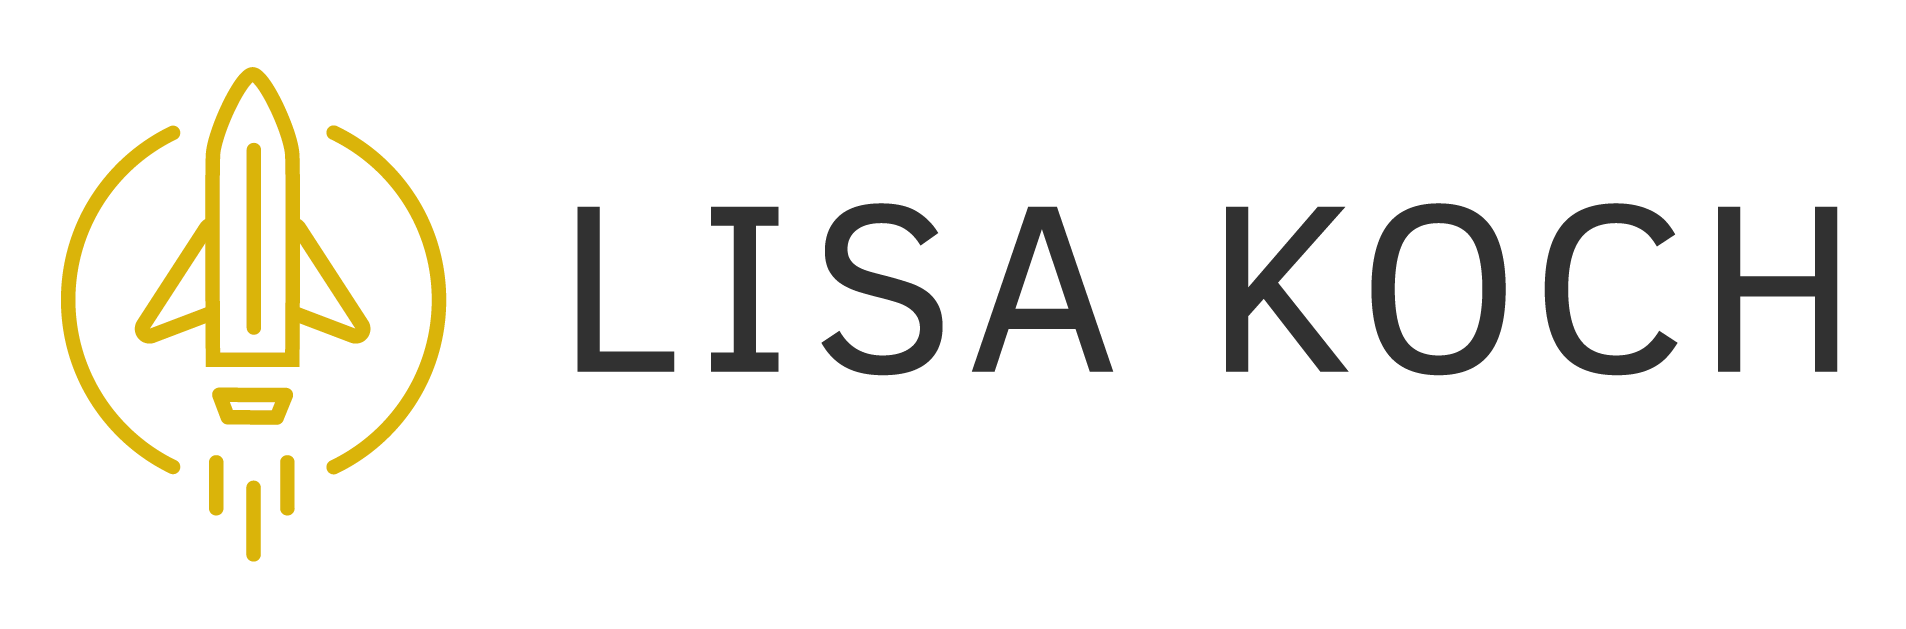 Logo-Lisa Koch_Zeichenfläche 1